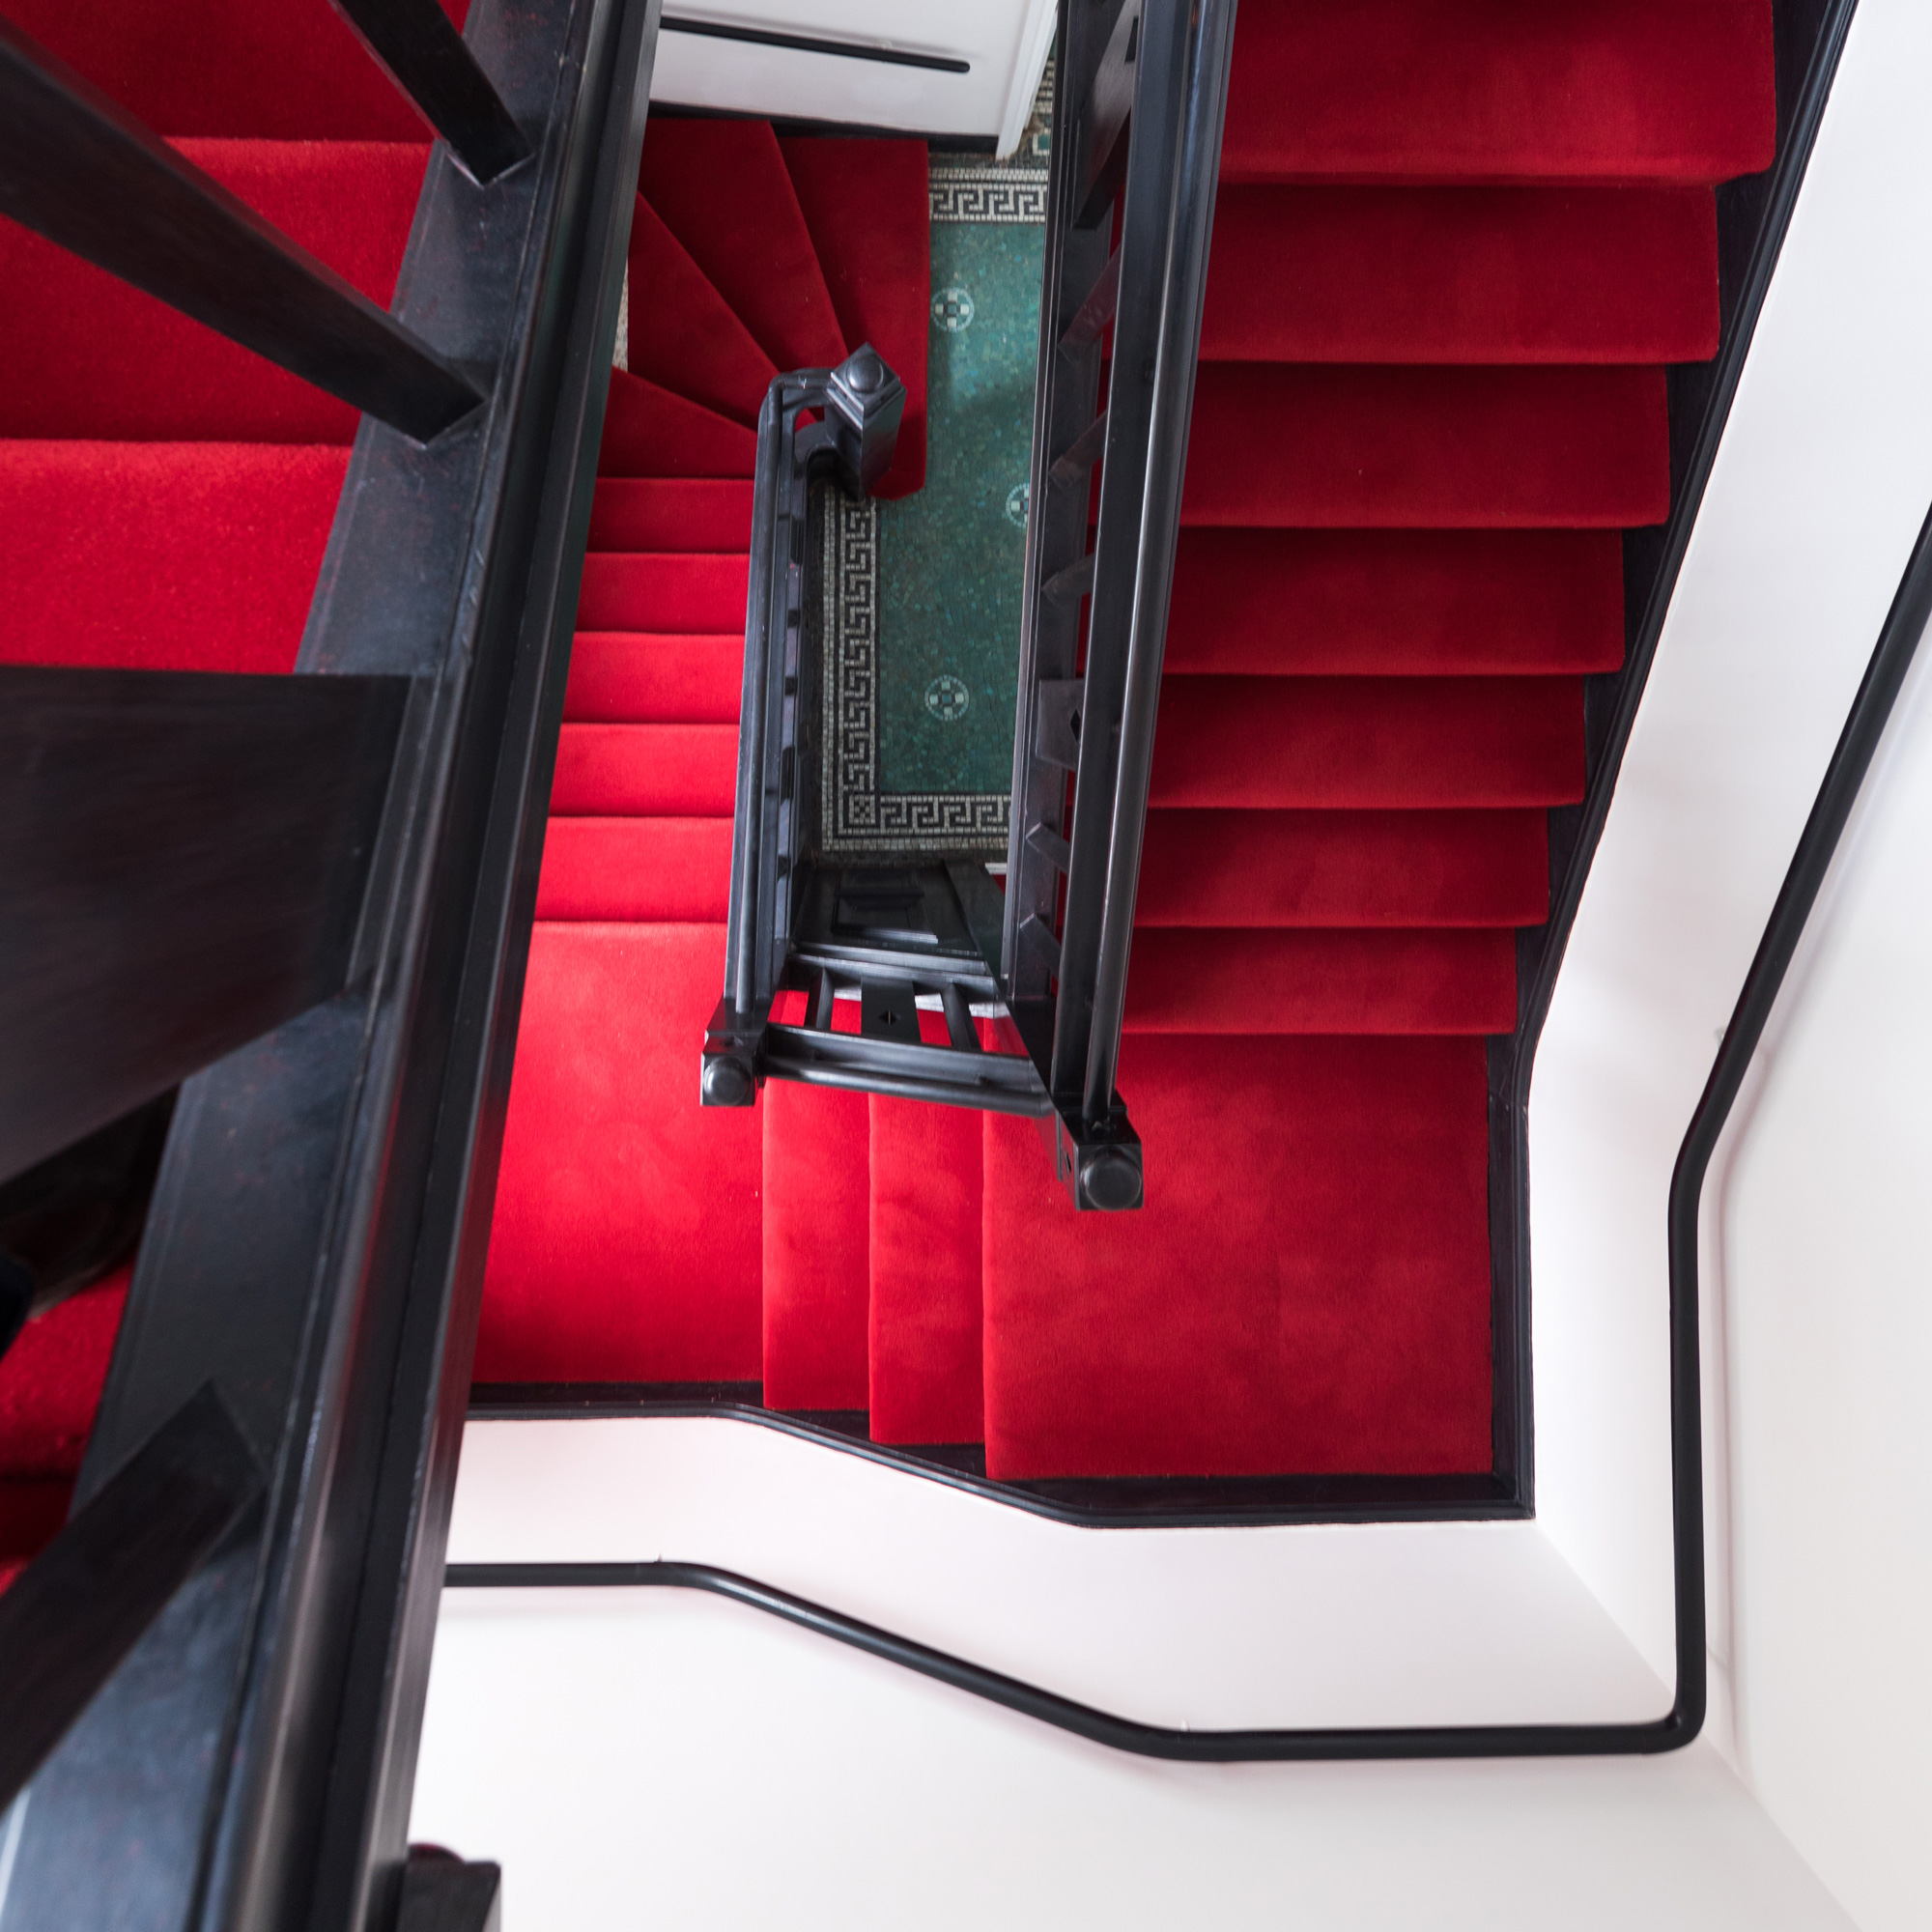 Roam London Stairways.